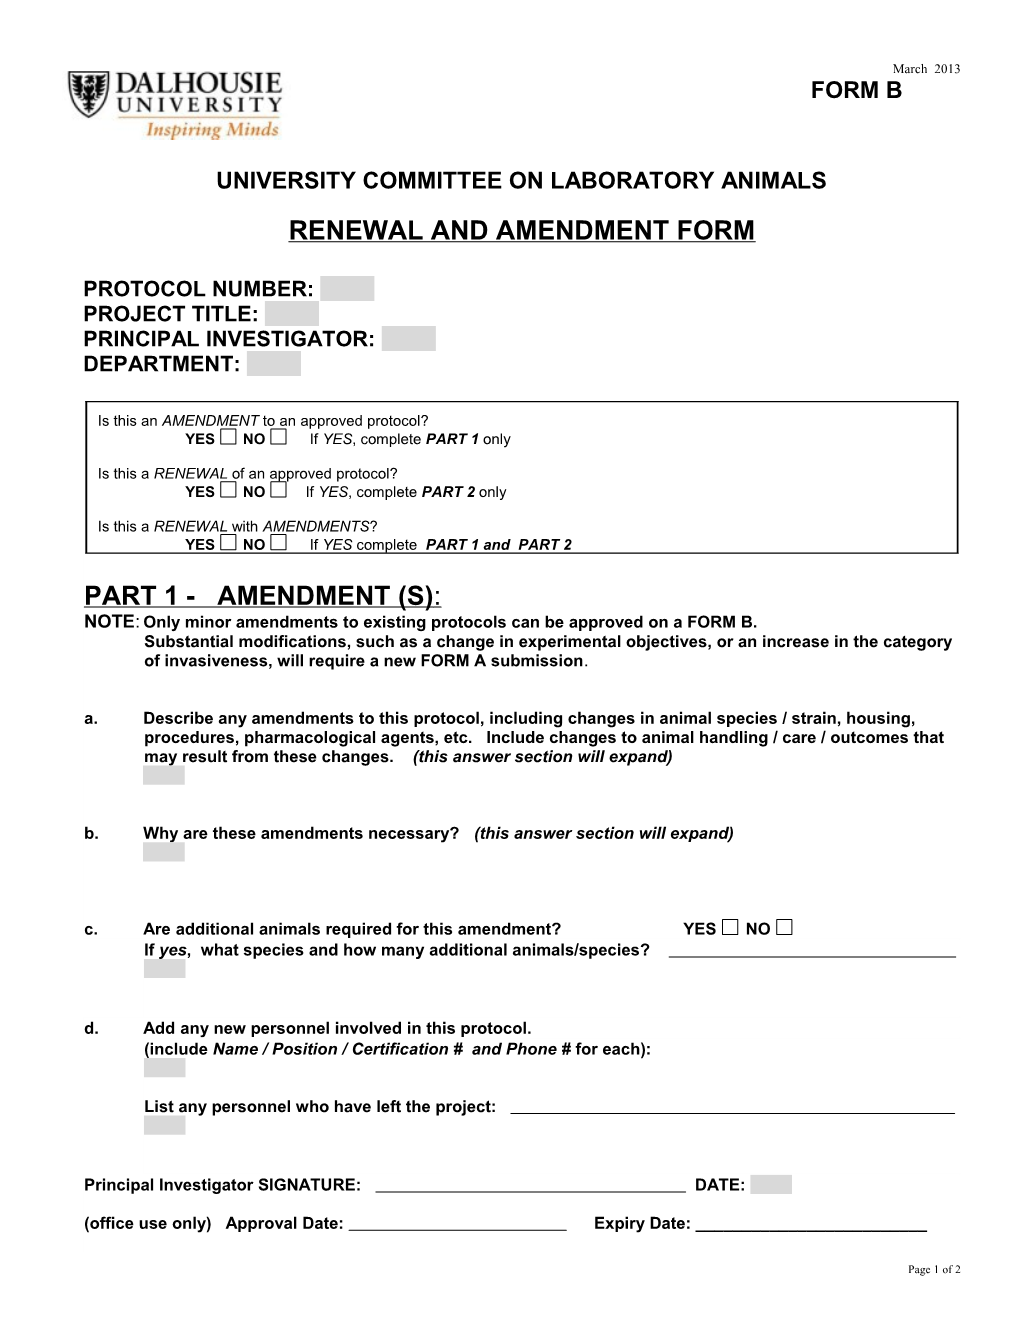 University Committee on Laboratory Animals